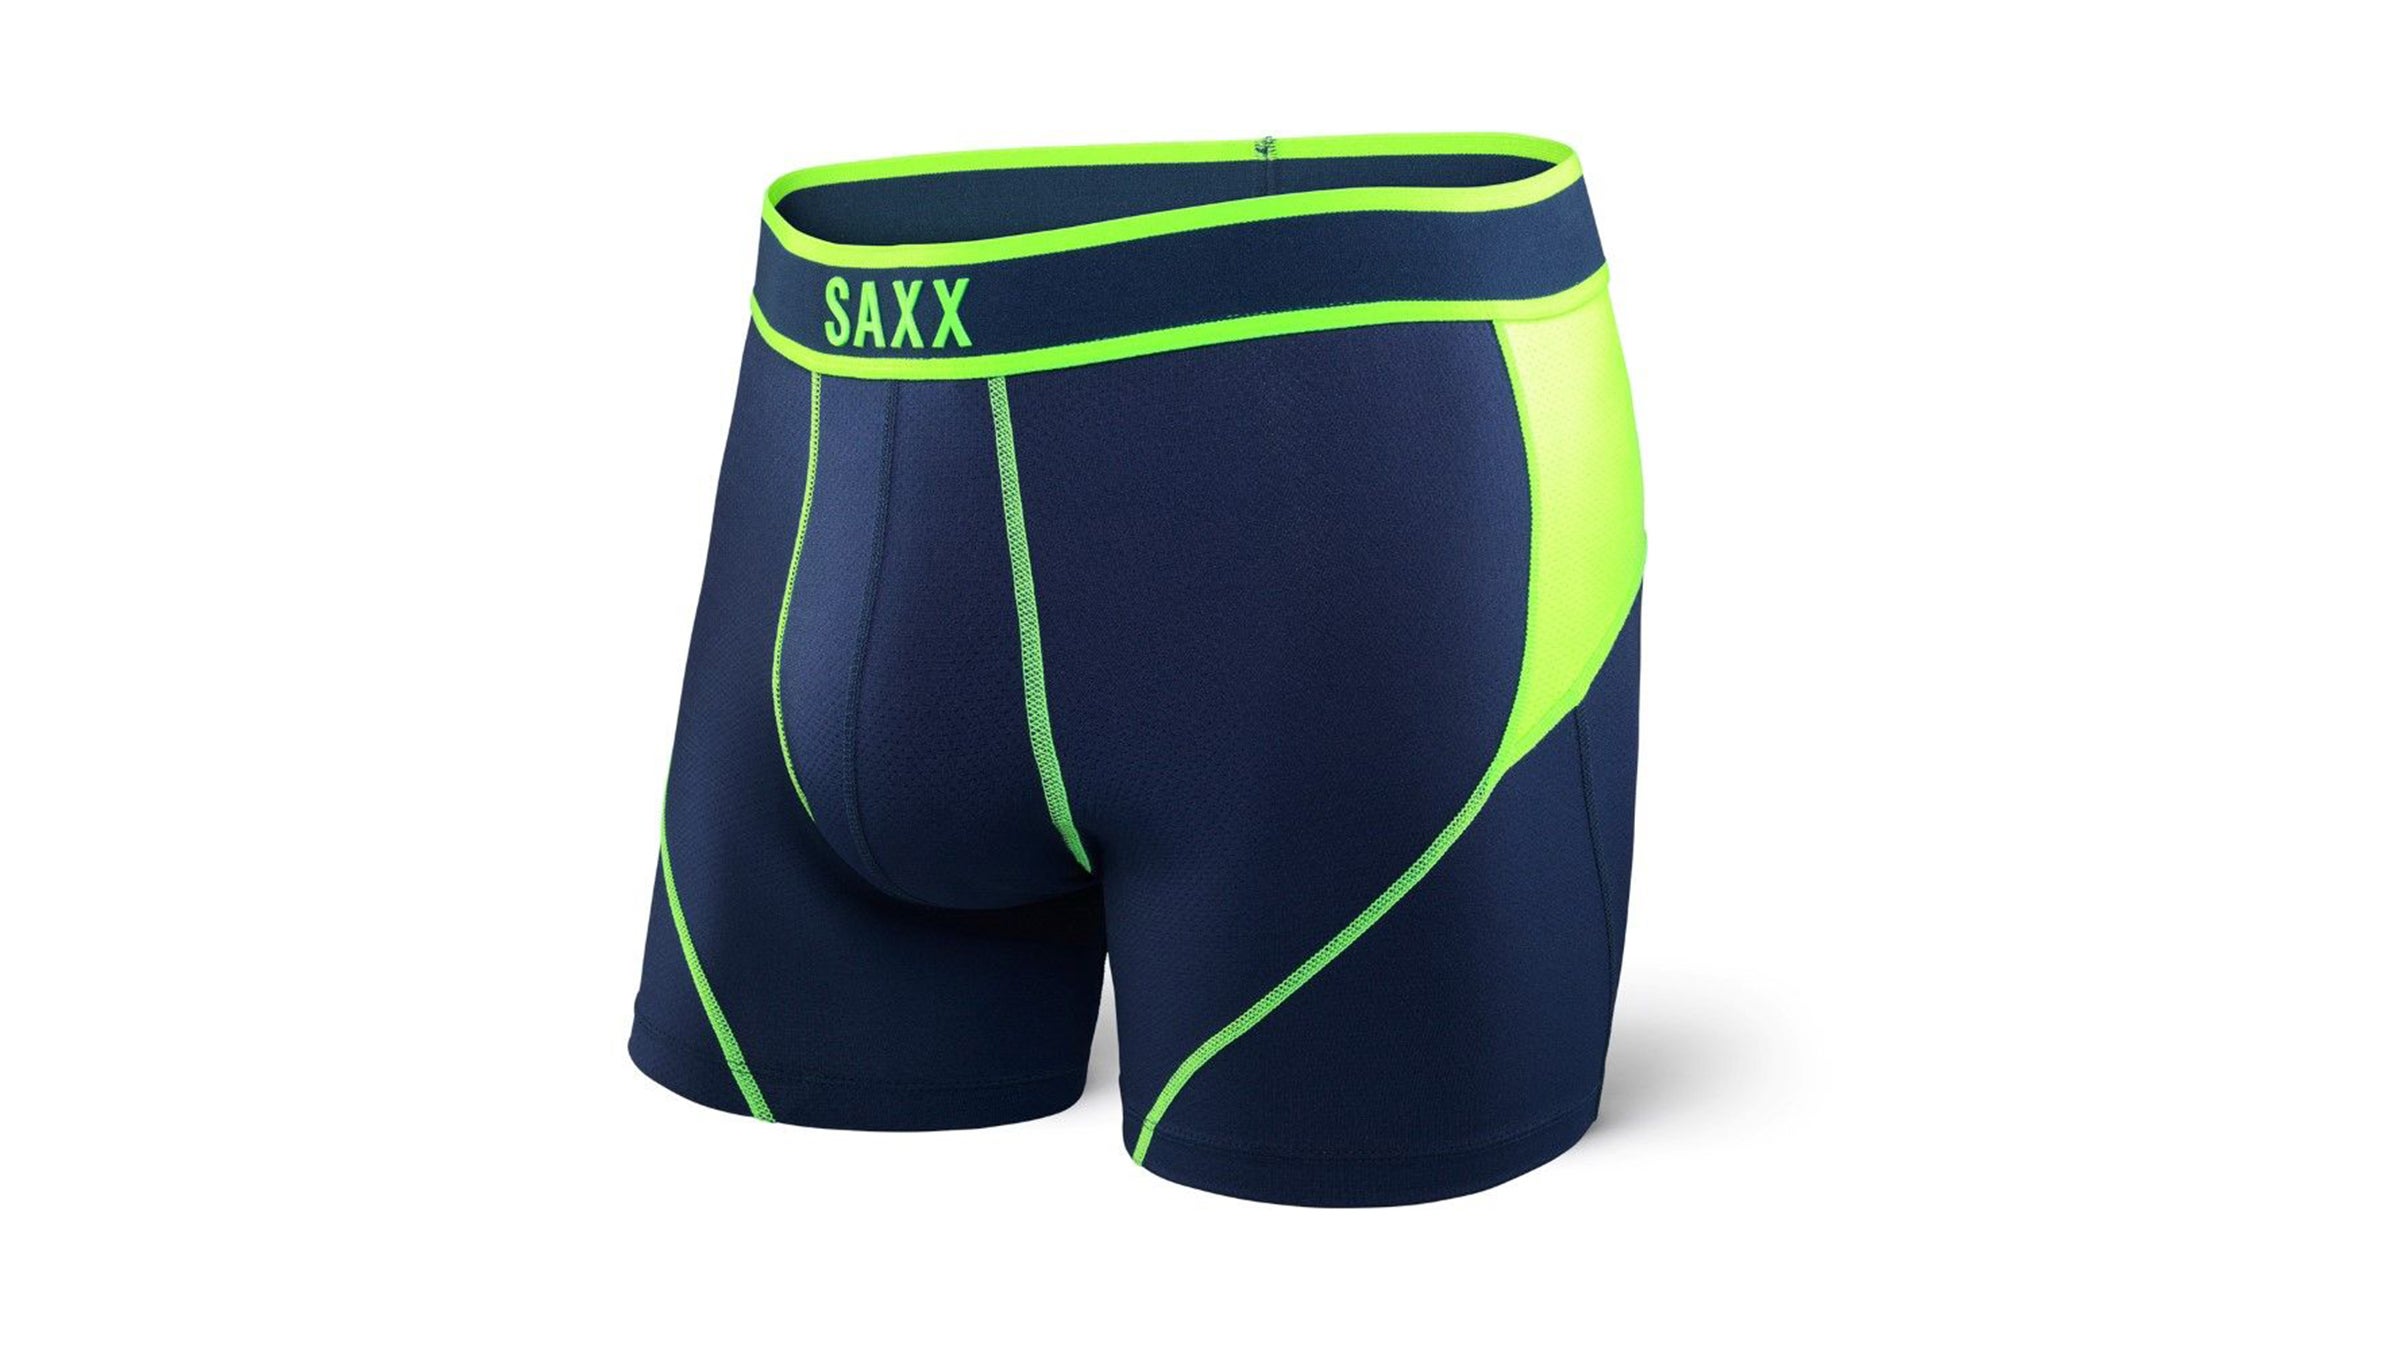 I Wore This Underwear For Five Years: SAXX Underwear Review 